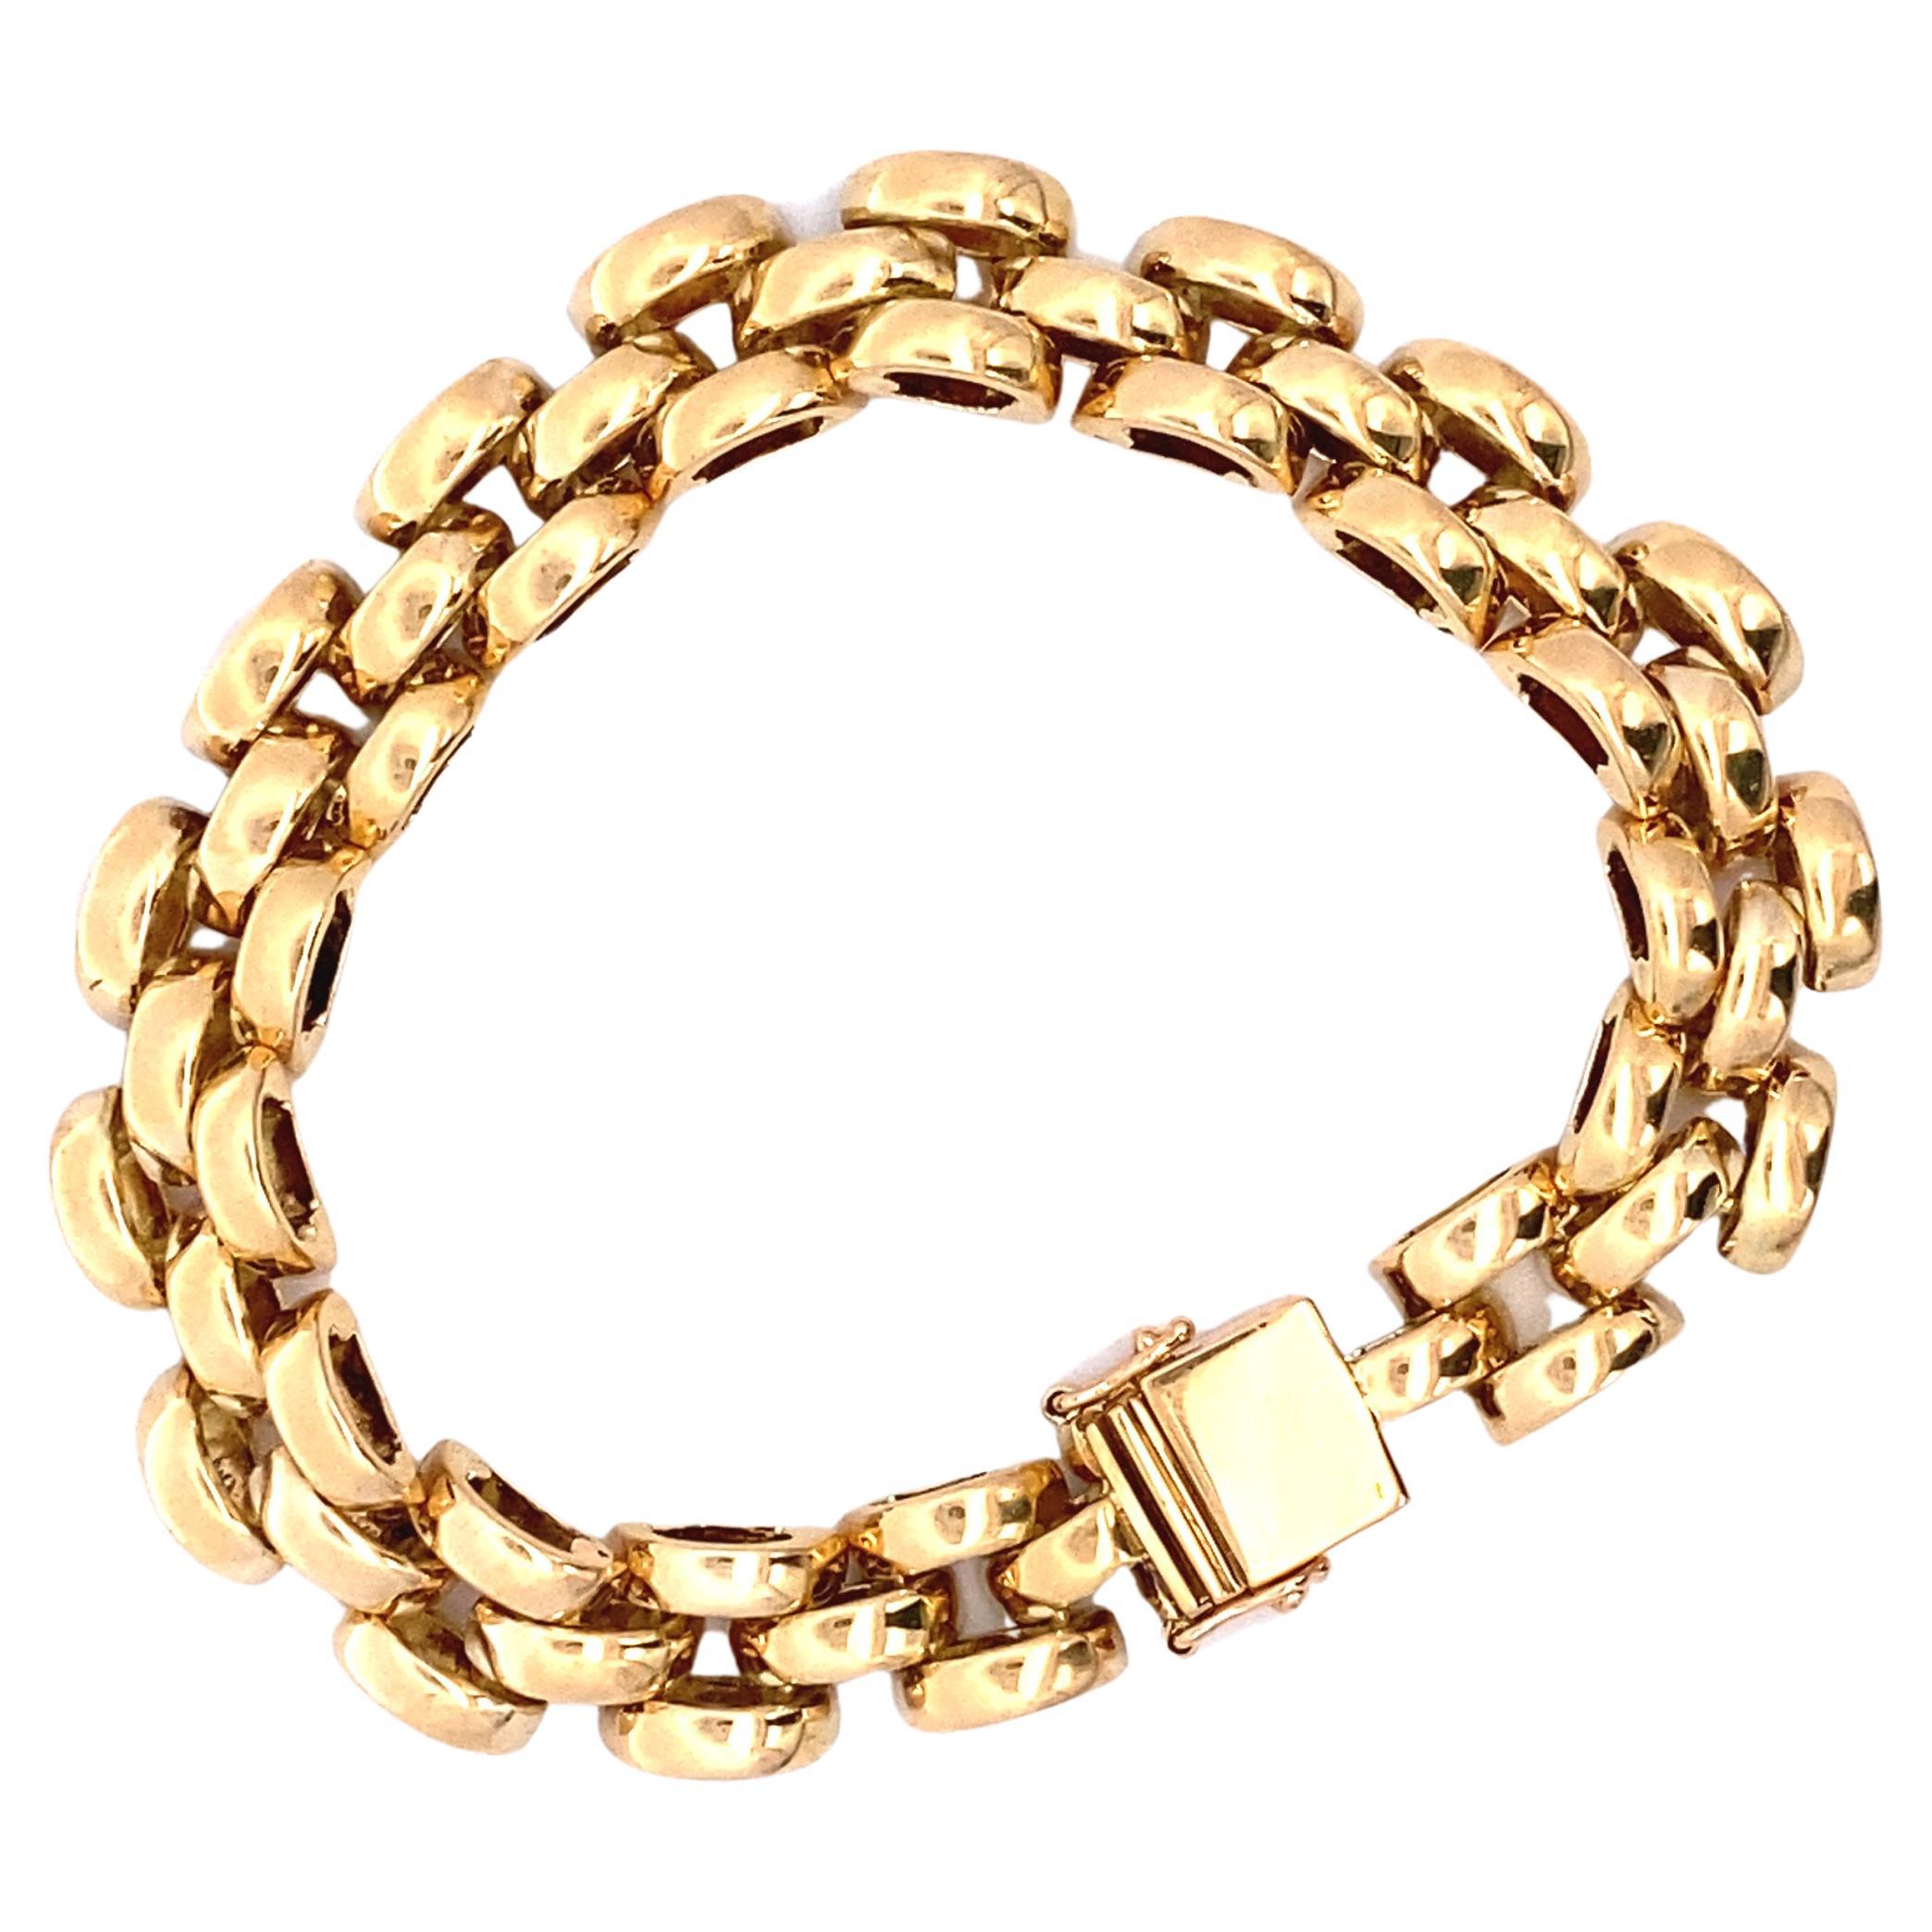 Woven Gold Link Bracelet